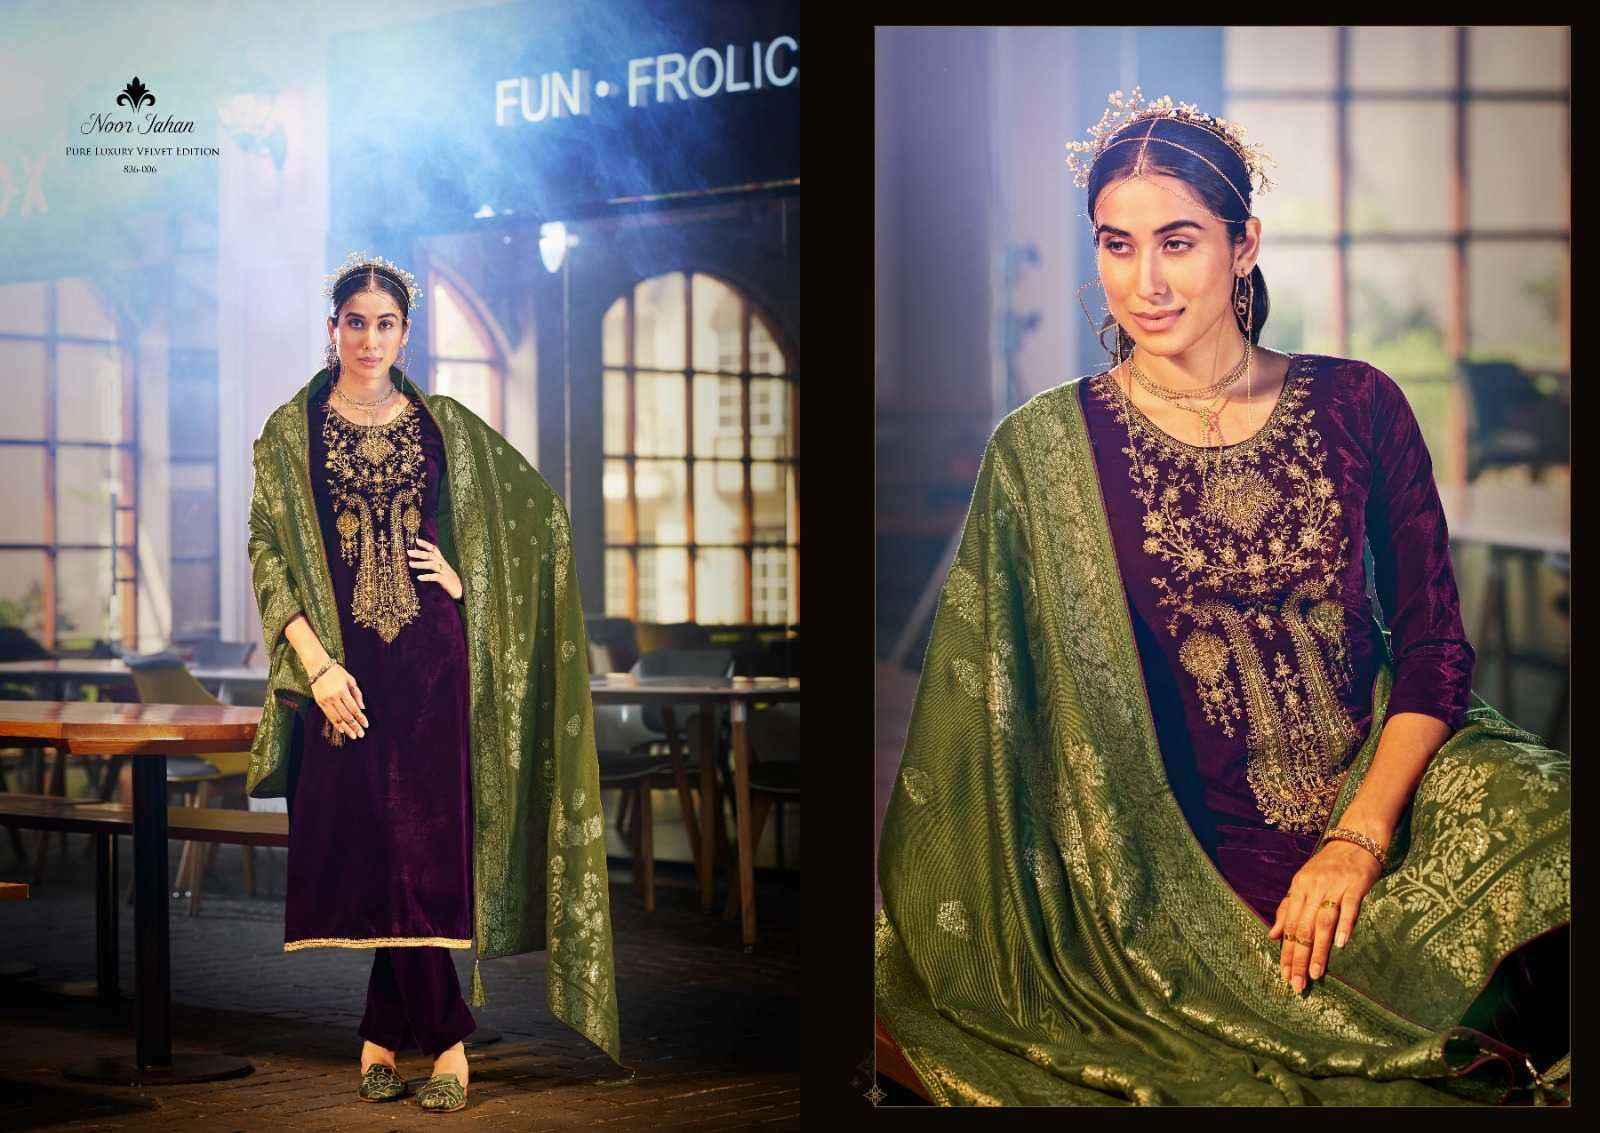 Belliza Noor Jahan Pashmina Dress Material 6 pcs set